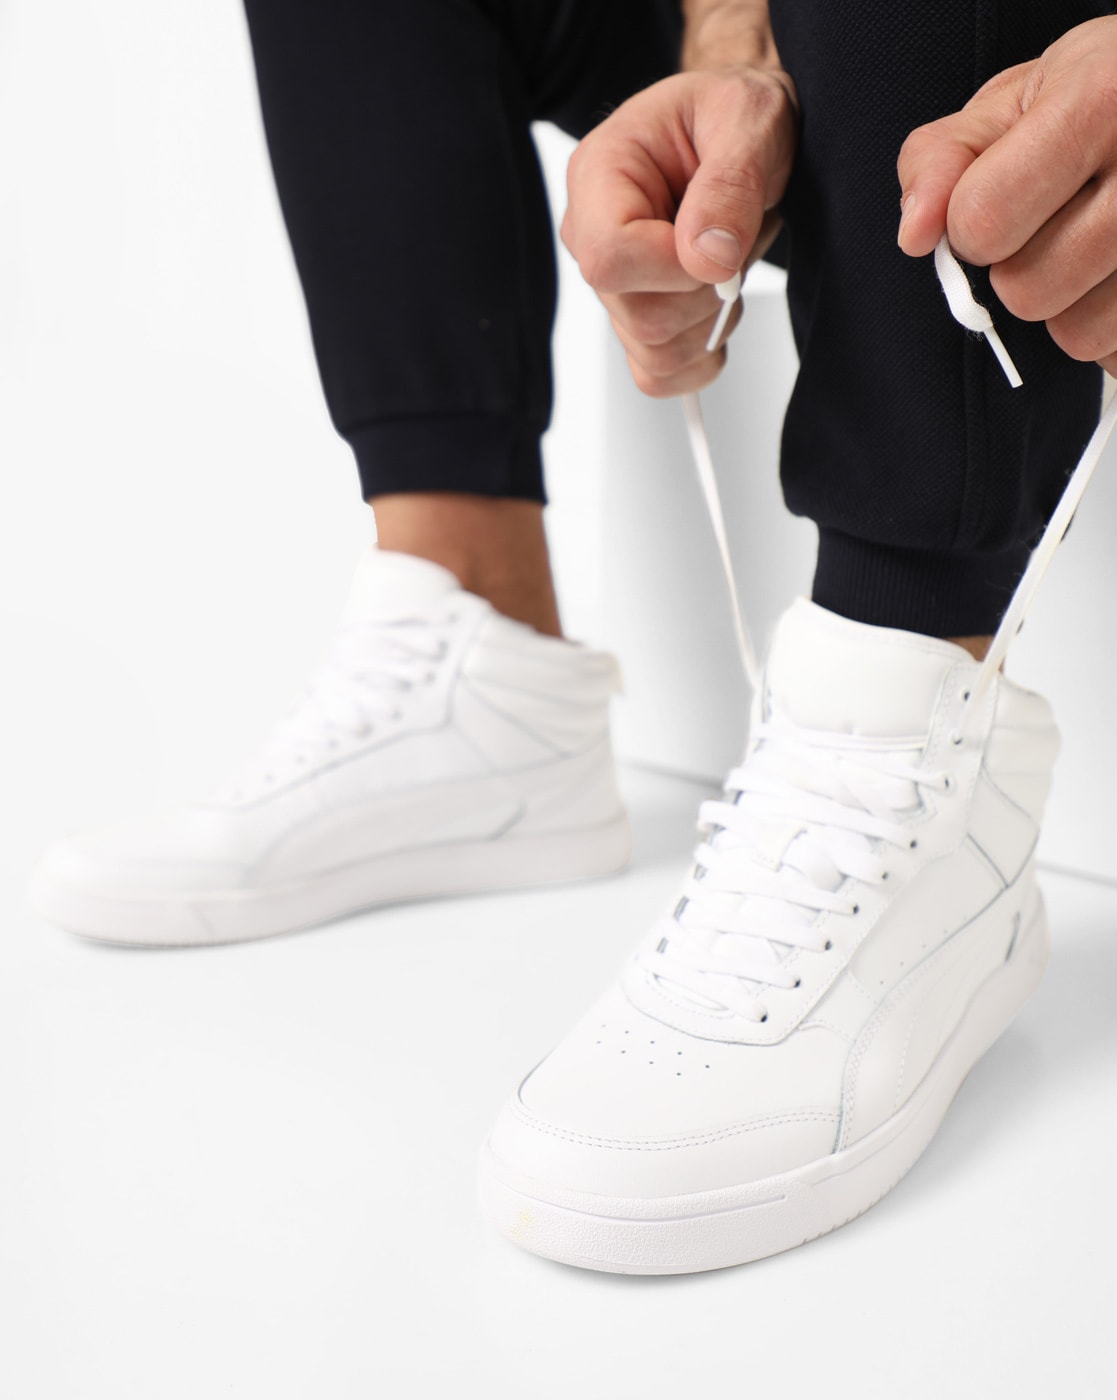 PUMA x FENTY Rihanna Ankle Strap Creeper Platform Sneakers Size 5.5 | eBay